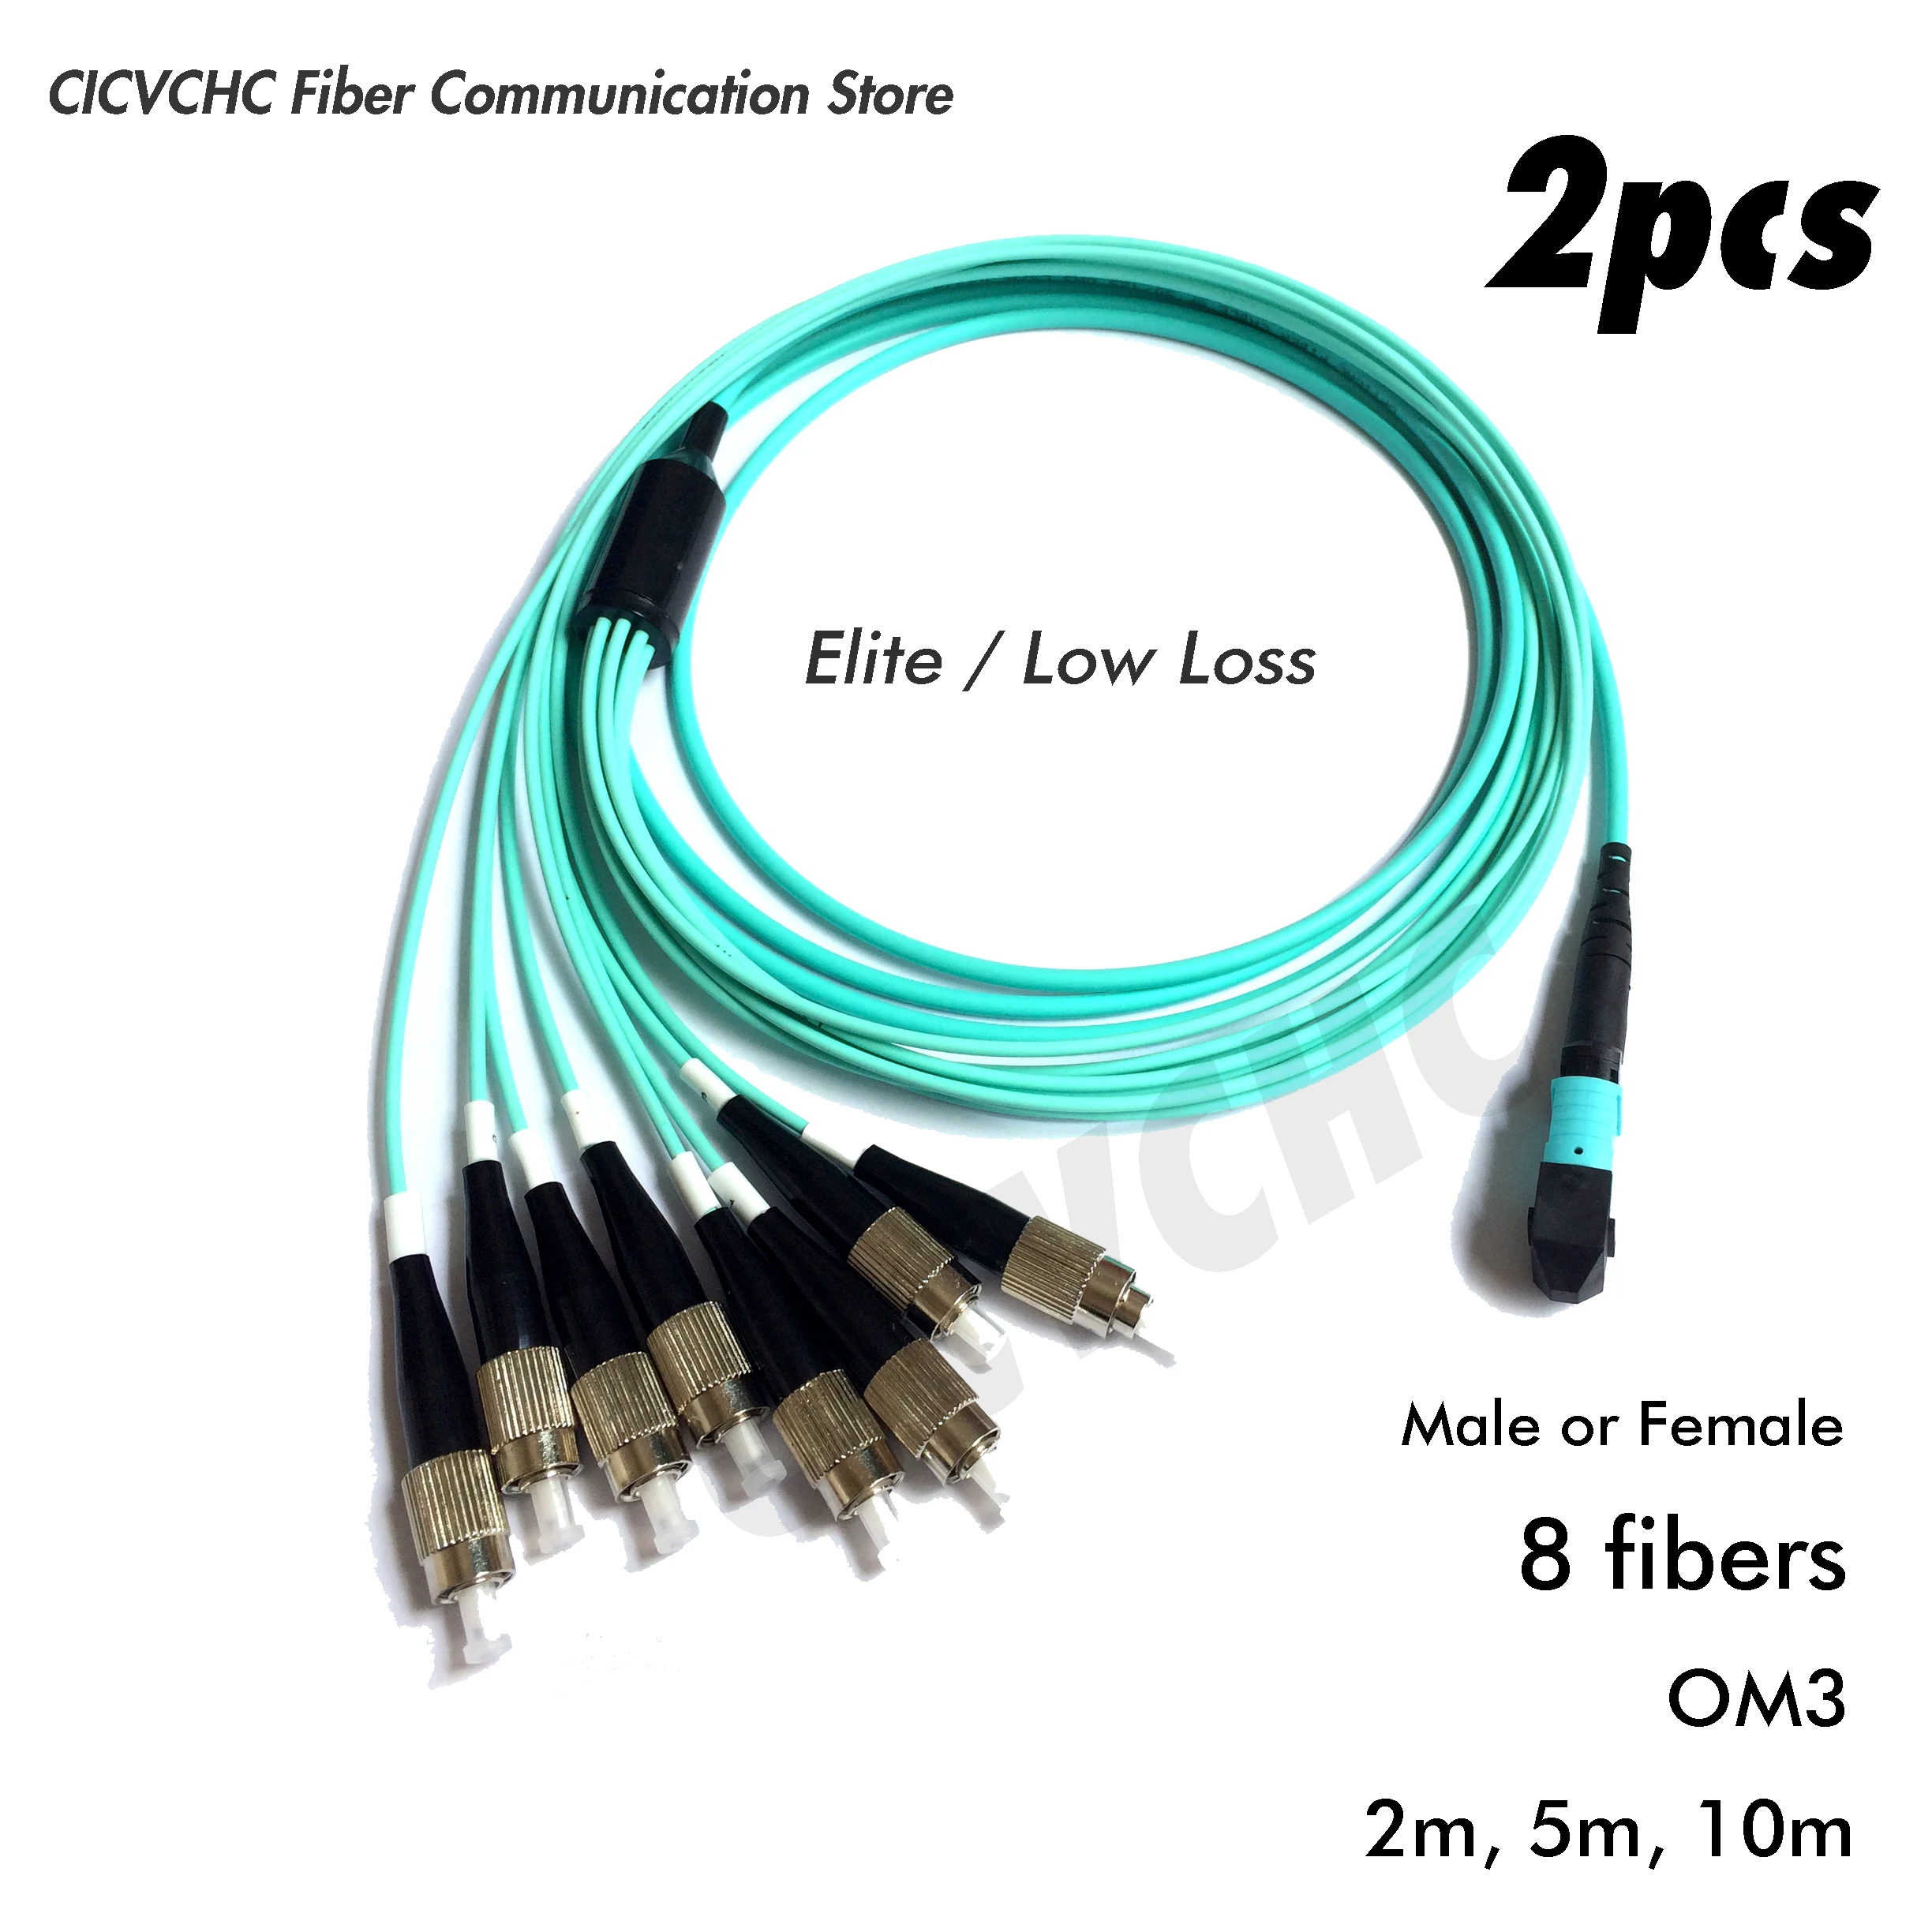 

2pcs 8 fibers-MPO/UPC-FC/UPC Elite-Fanout-Multimode-OM3-300-2m to 10m/QSFP+ till SFP+/MPO Fan-out Assembly